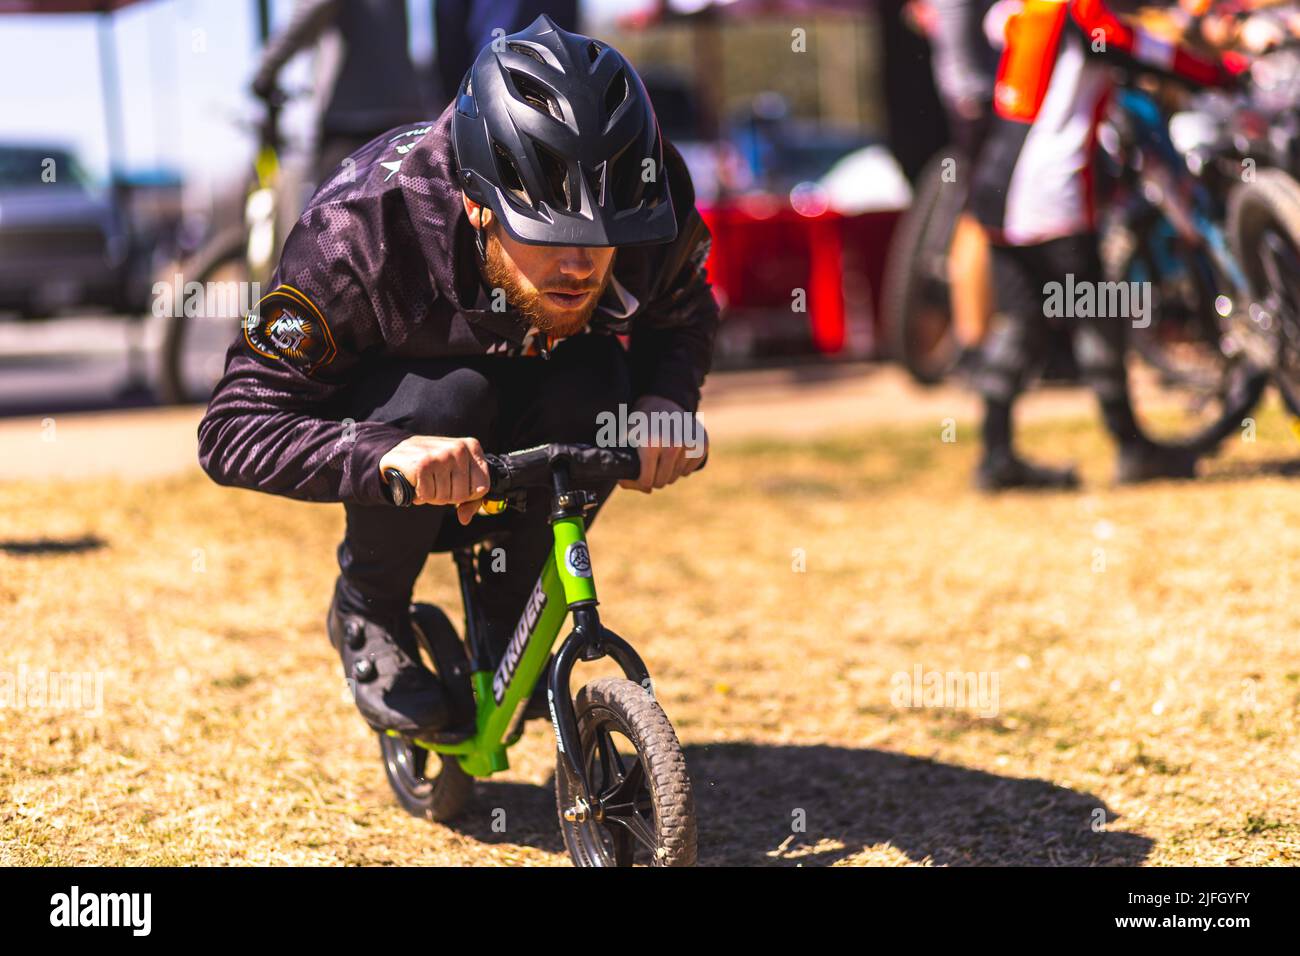 A Caucasian man sitting on a mini bike during the DFW metroplex race in Texas Stock Photo